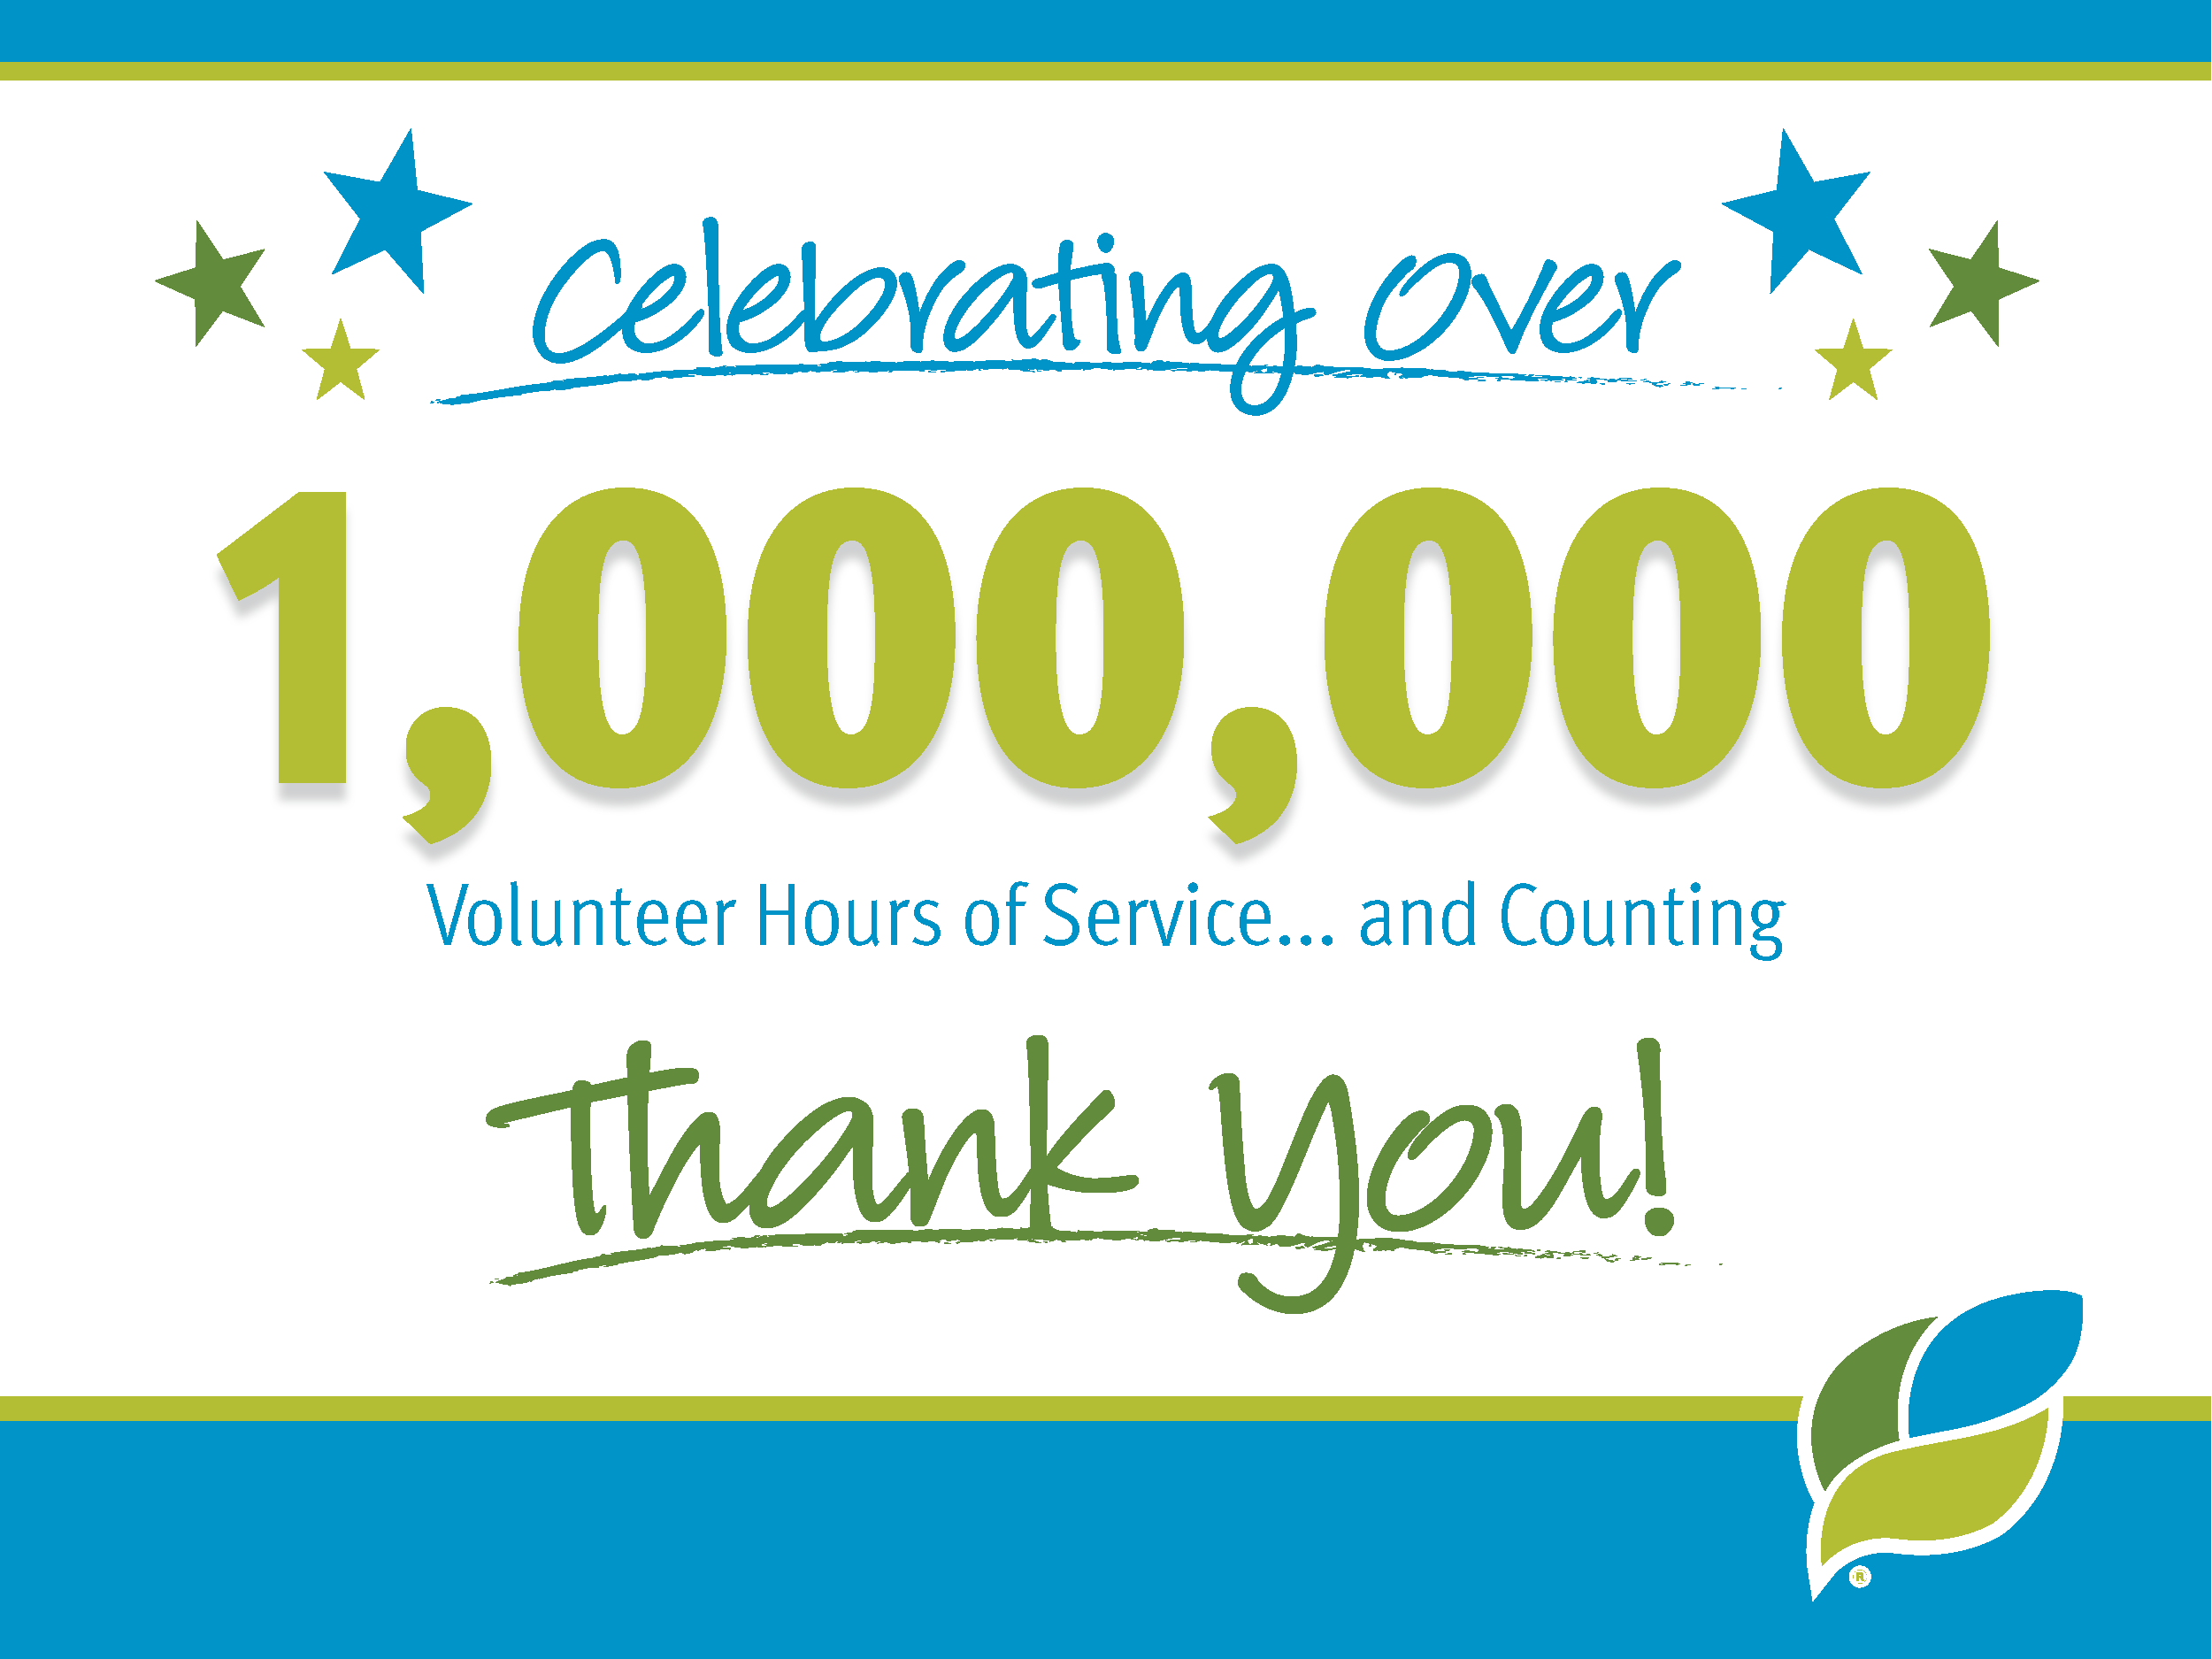 Celebrating Over 1,000,000 Volunteer Hours of Service